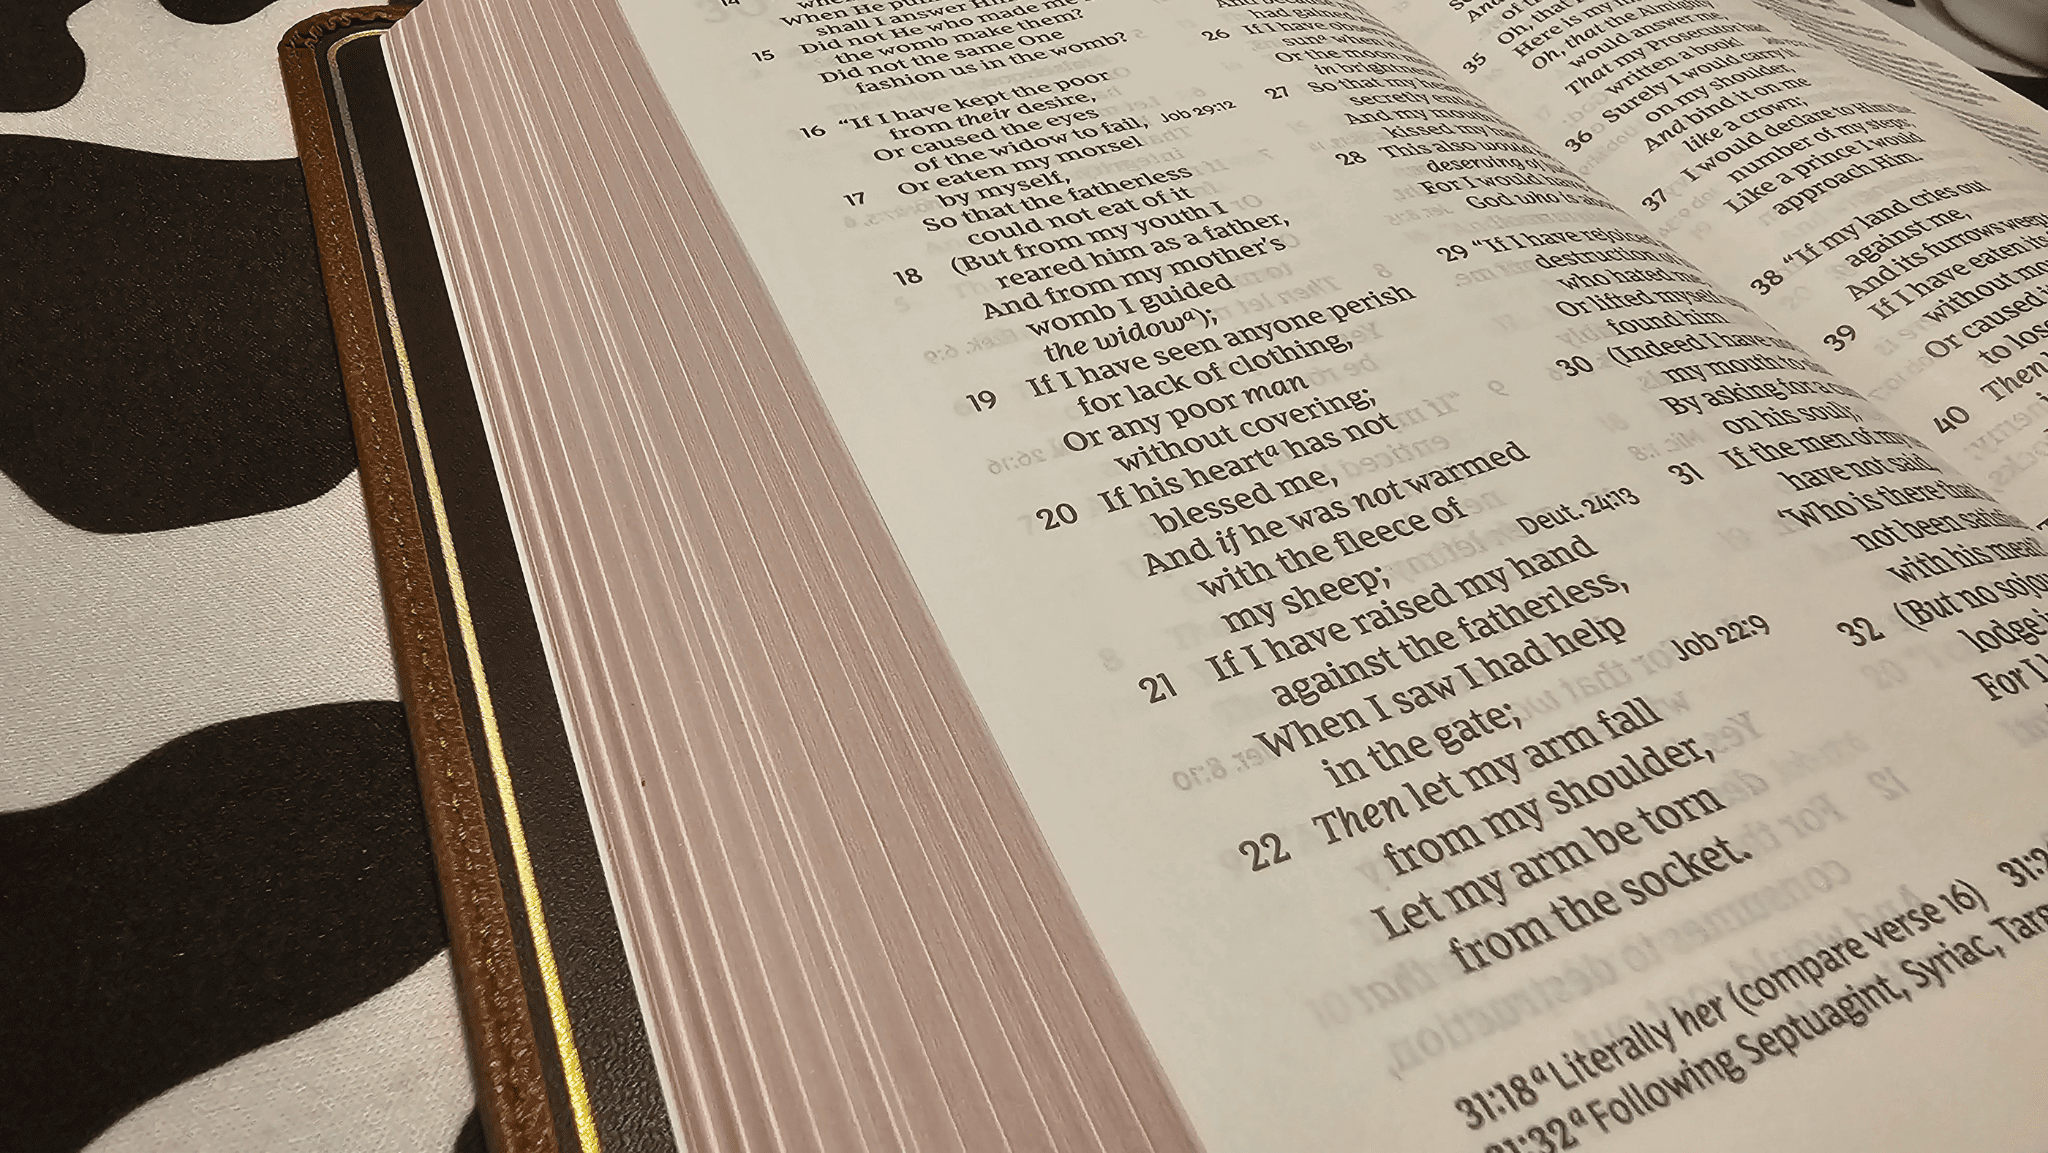 NKJV End-of-Verse Reference Bible Premier Collection